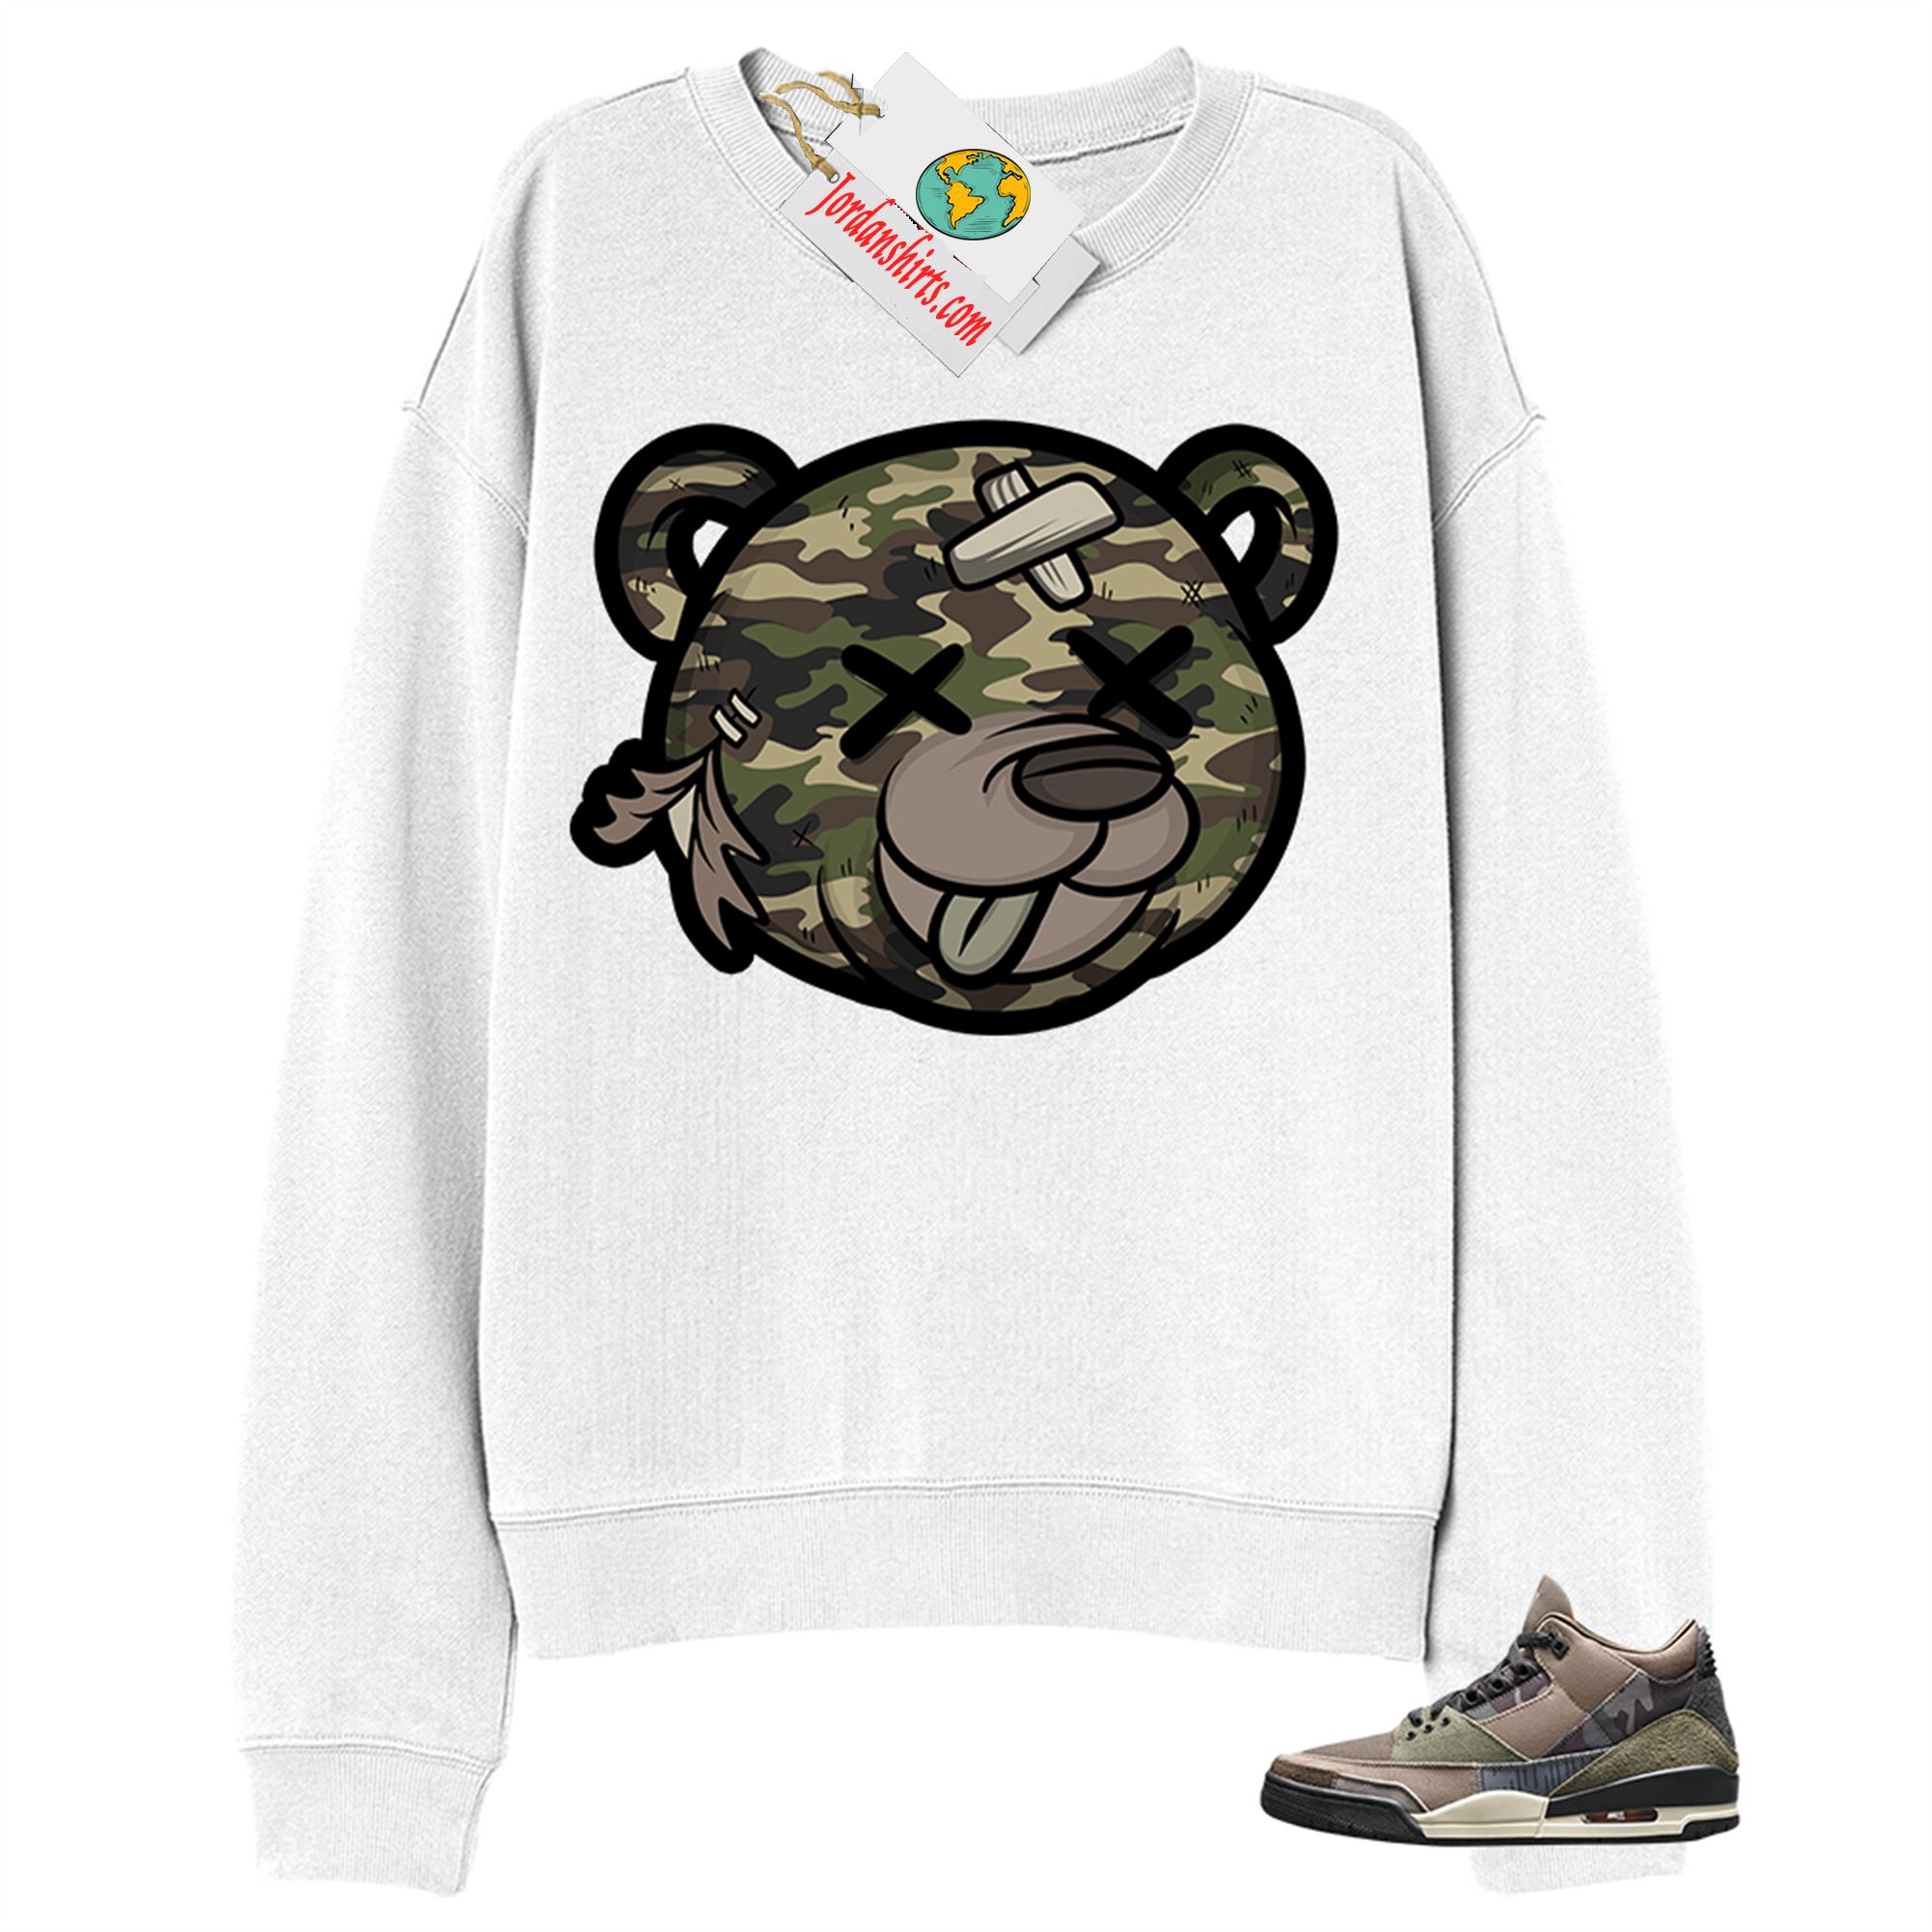 Jordan 3 Sweatshirt, Teddy Bear Head White Sweatshirt Air Jordan 3 Camo 3s Plus Size Up To 5xl